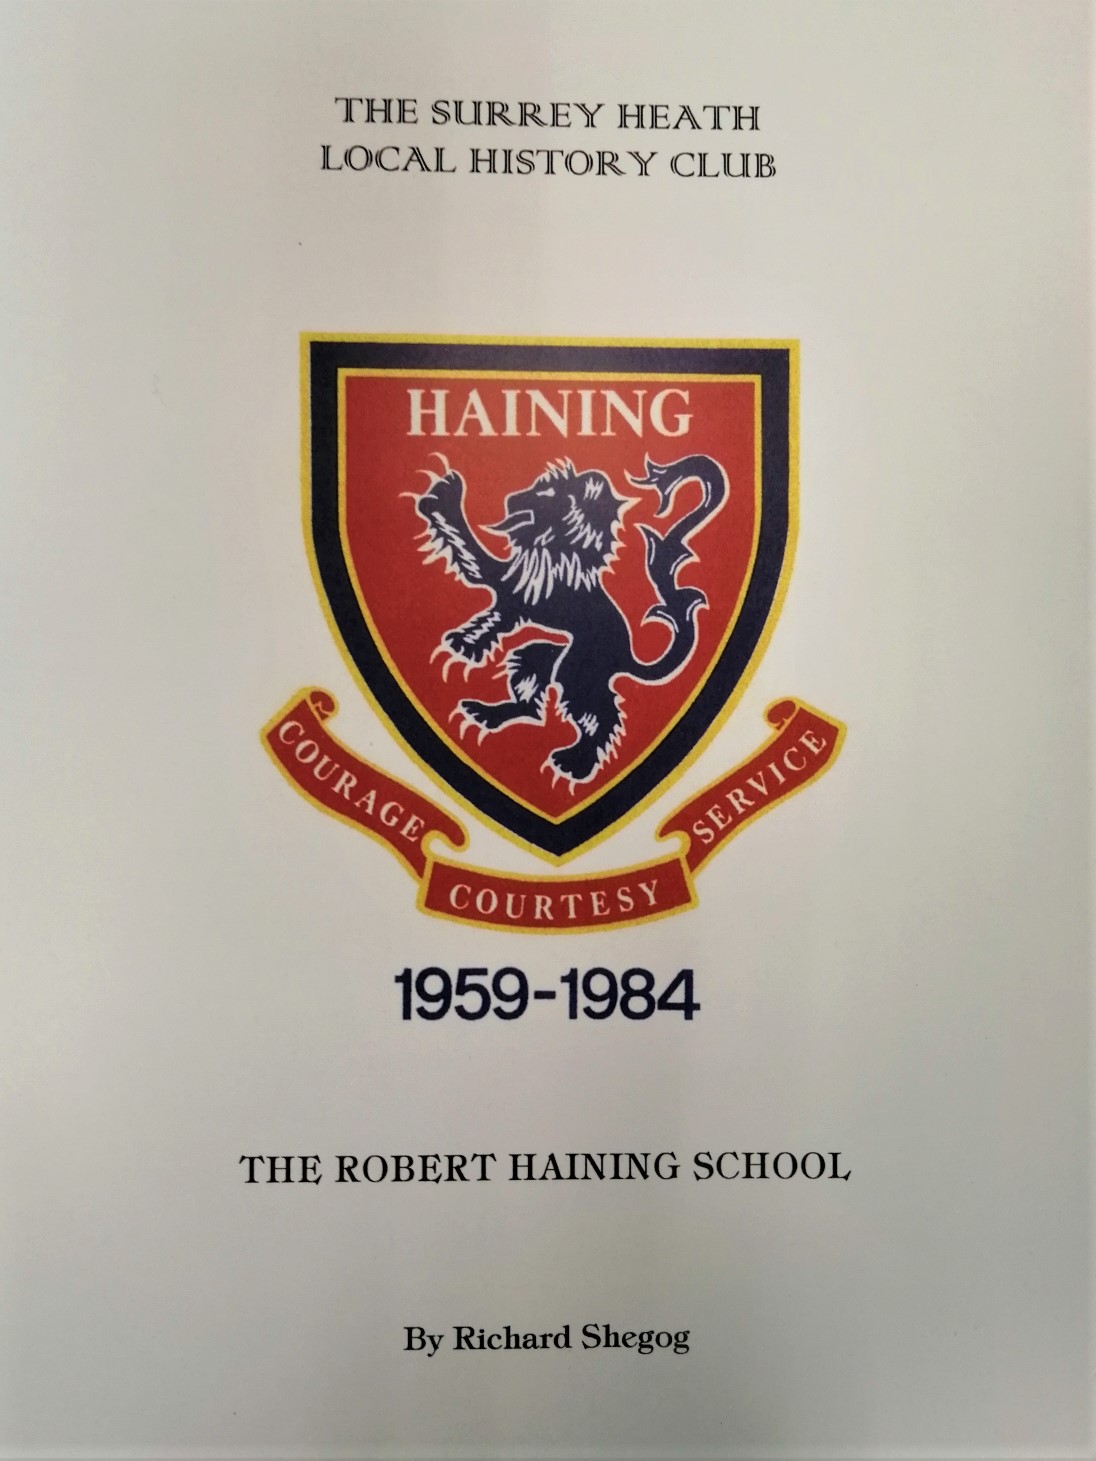 THE ROBERT HAINING SCHOOL MYTCHETT